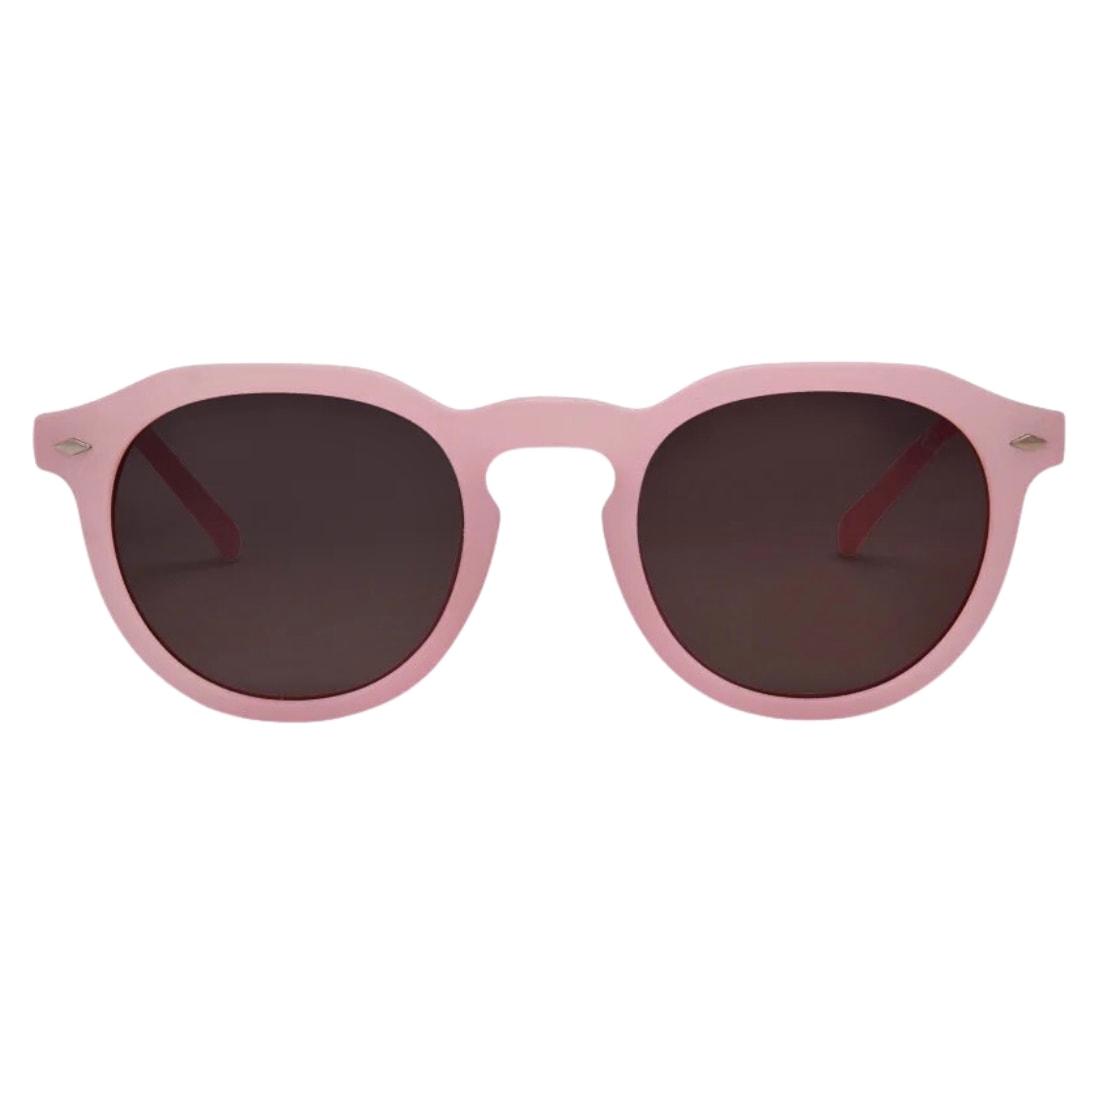 I-Sea Blair Conklin Round Polarised Sunglasses - Pink Punch/Plum Polarized Lens - Round Sunglasses by I-Sea